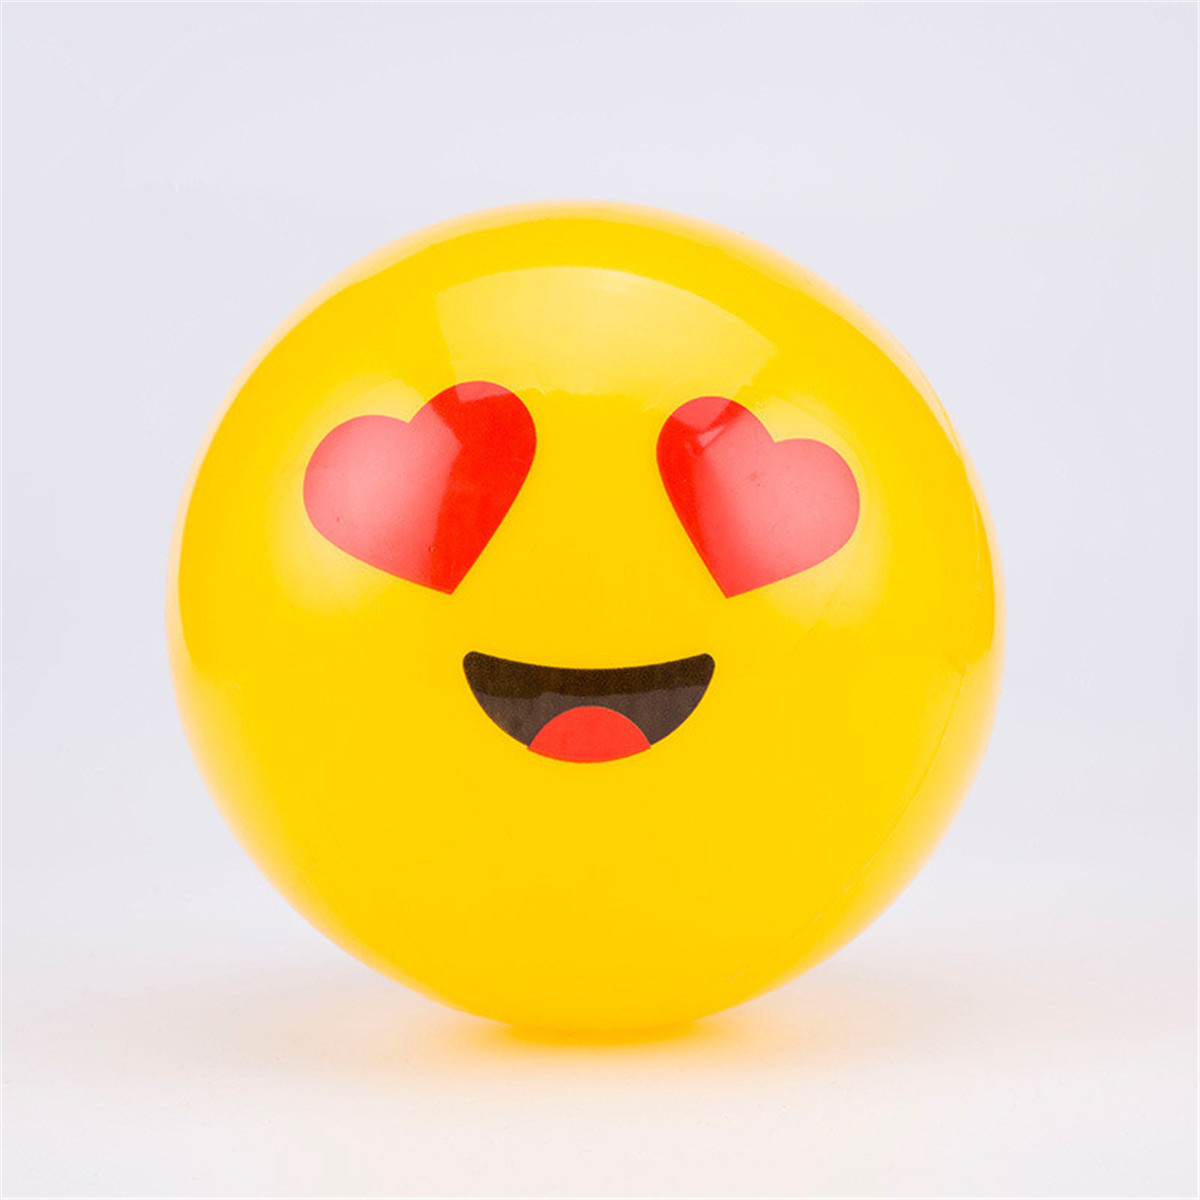 69inch-PVC-Emoji-Beach-Balls-Inflatable-Soft-Ball-KidsampAdult-Water-Play-Pool-Party-Toys-1188844